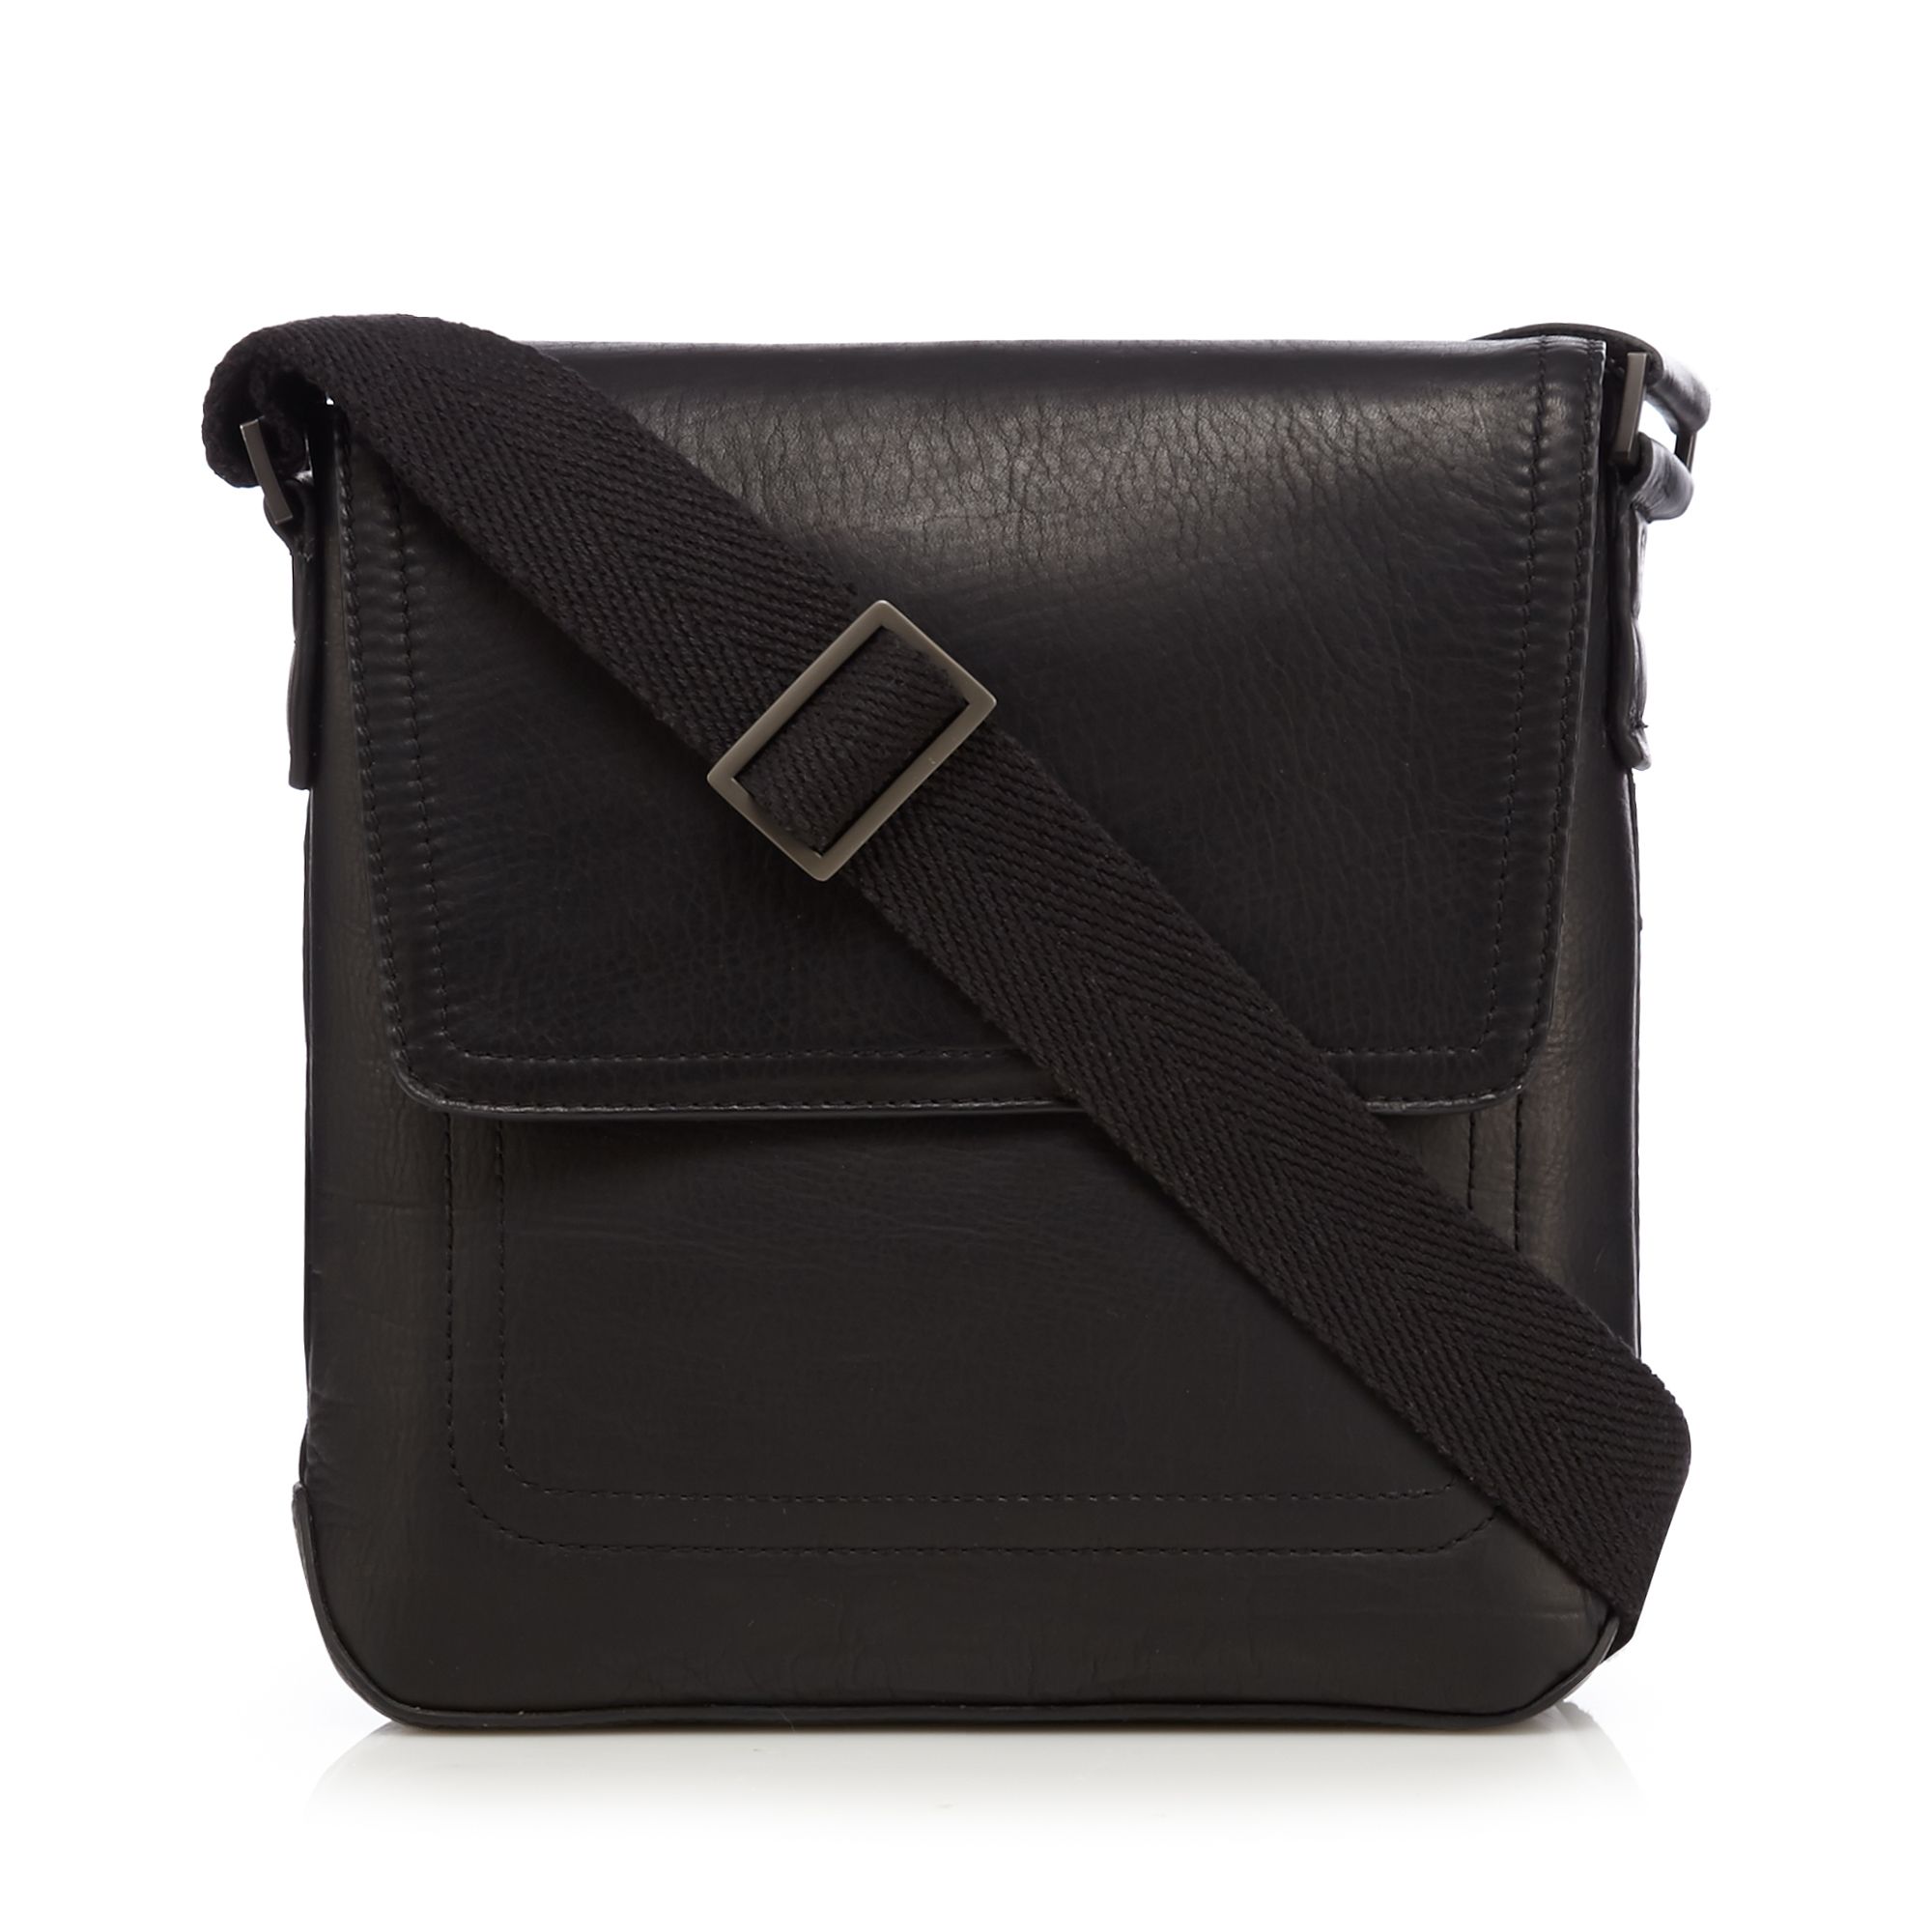 J By Jasper Conran Mens Designer Black Leather Small Utility Bag From Debenhams | eBay